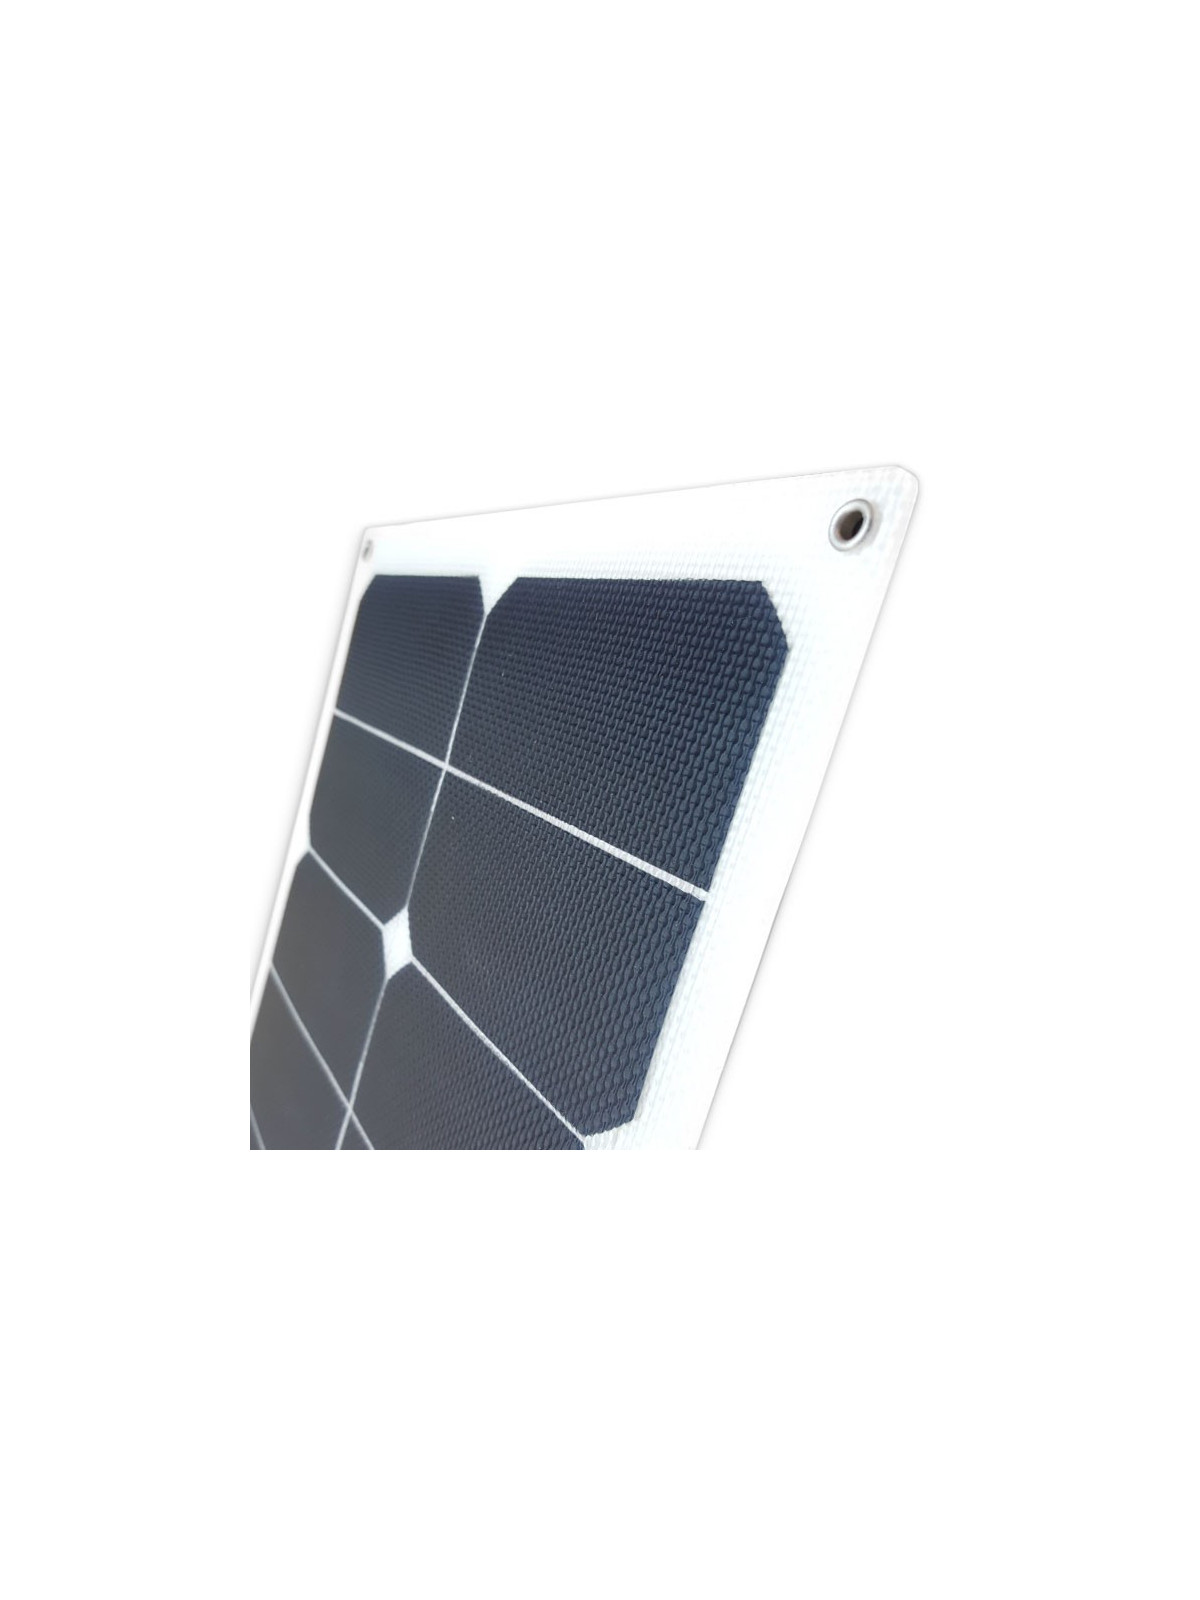 MX FLEX 100Wp PROTECT 12V panel solar flexible